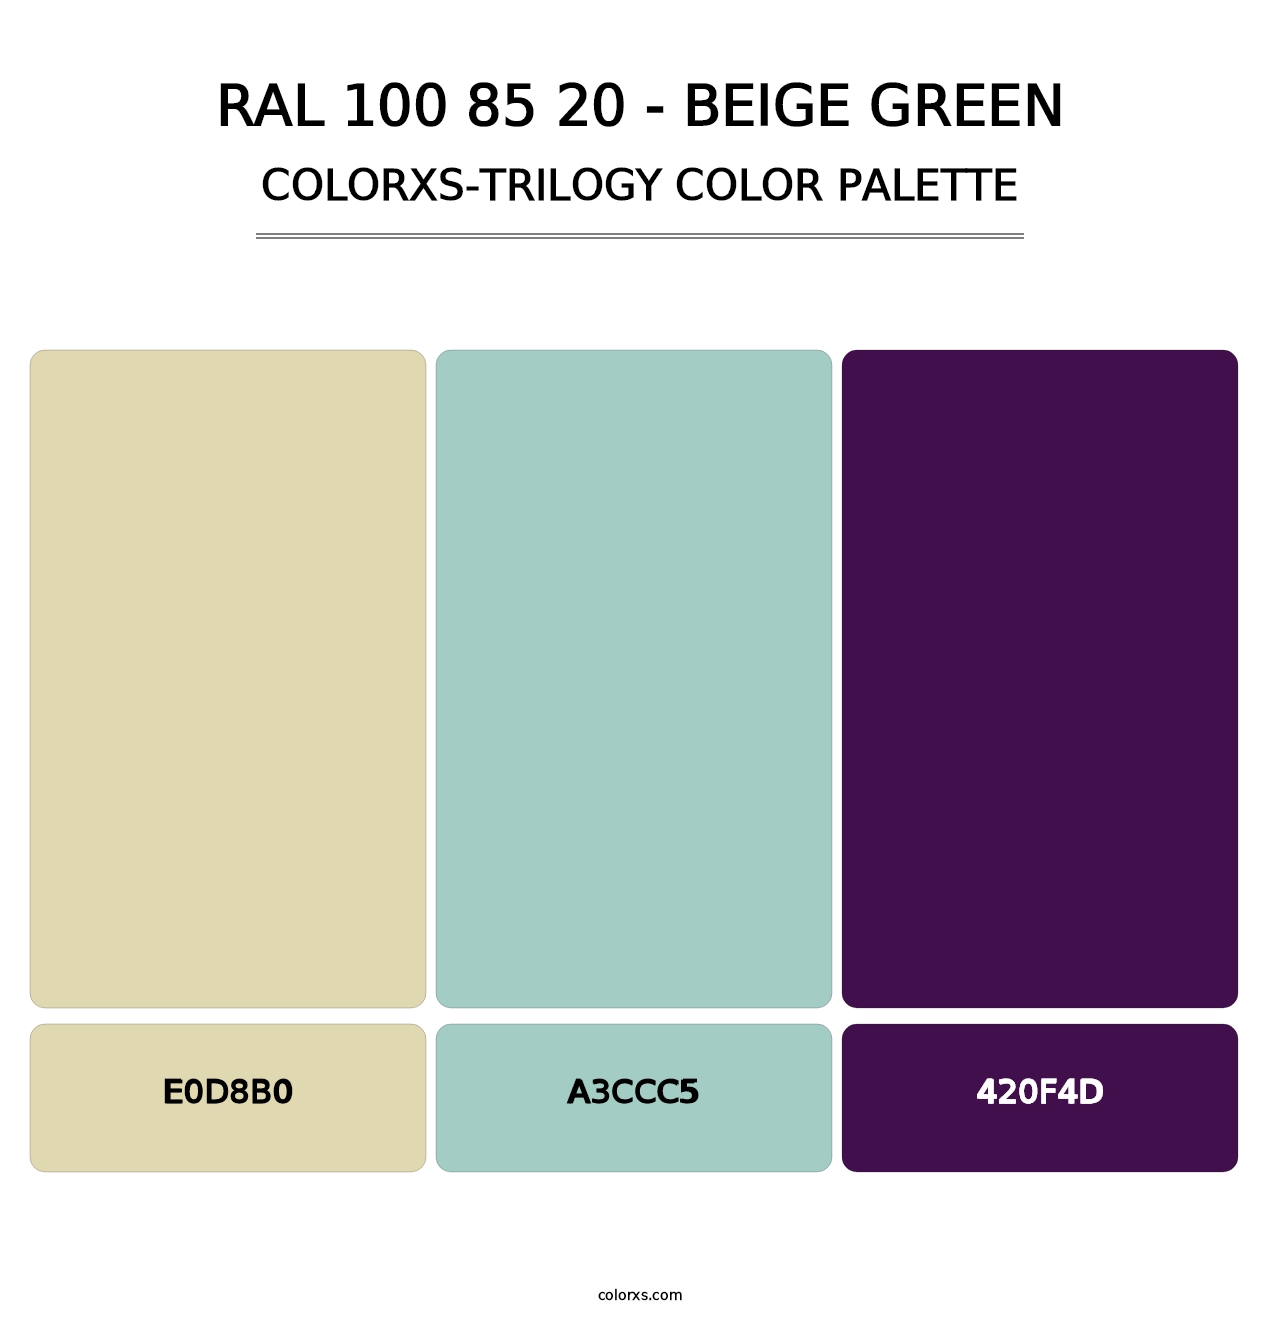 RAL 100 85 20 - Beige Green - Colorxs Trilogy Palette